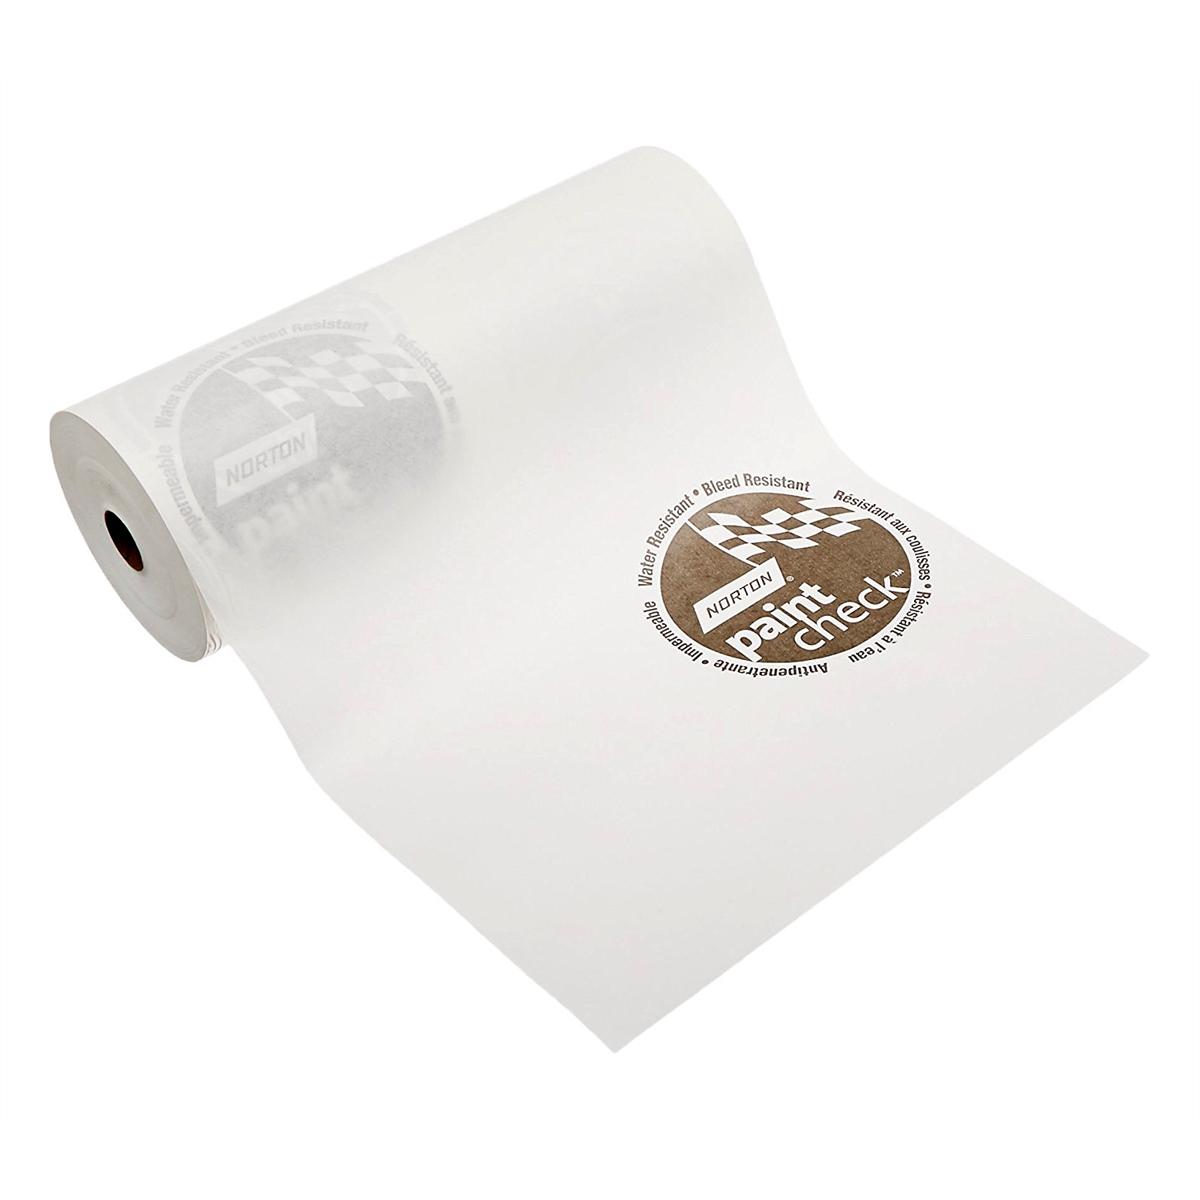 DealerShop - Masking Paper White 6in x 750ft - PM6L - Masking